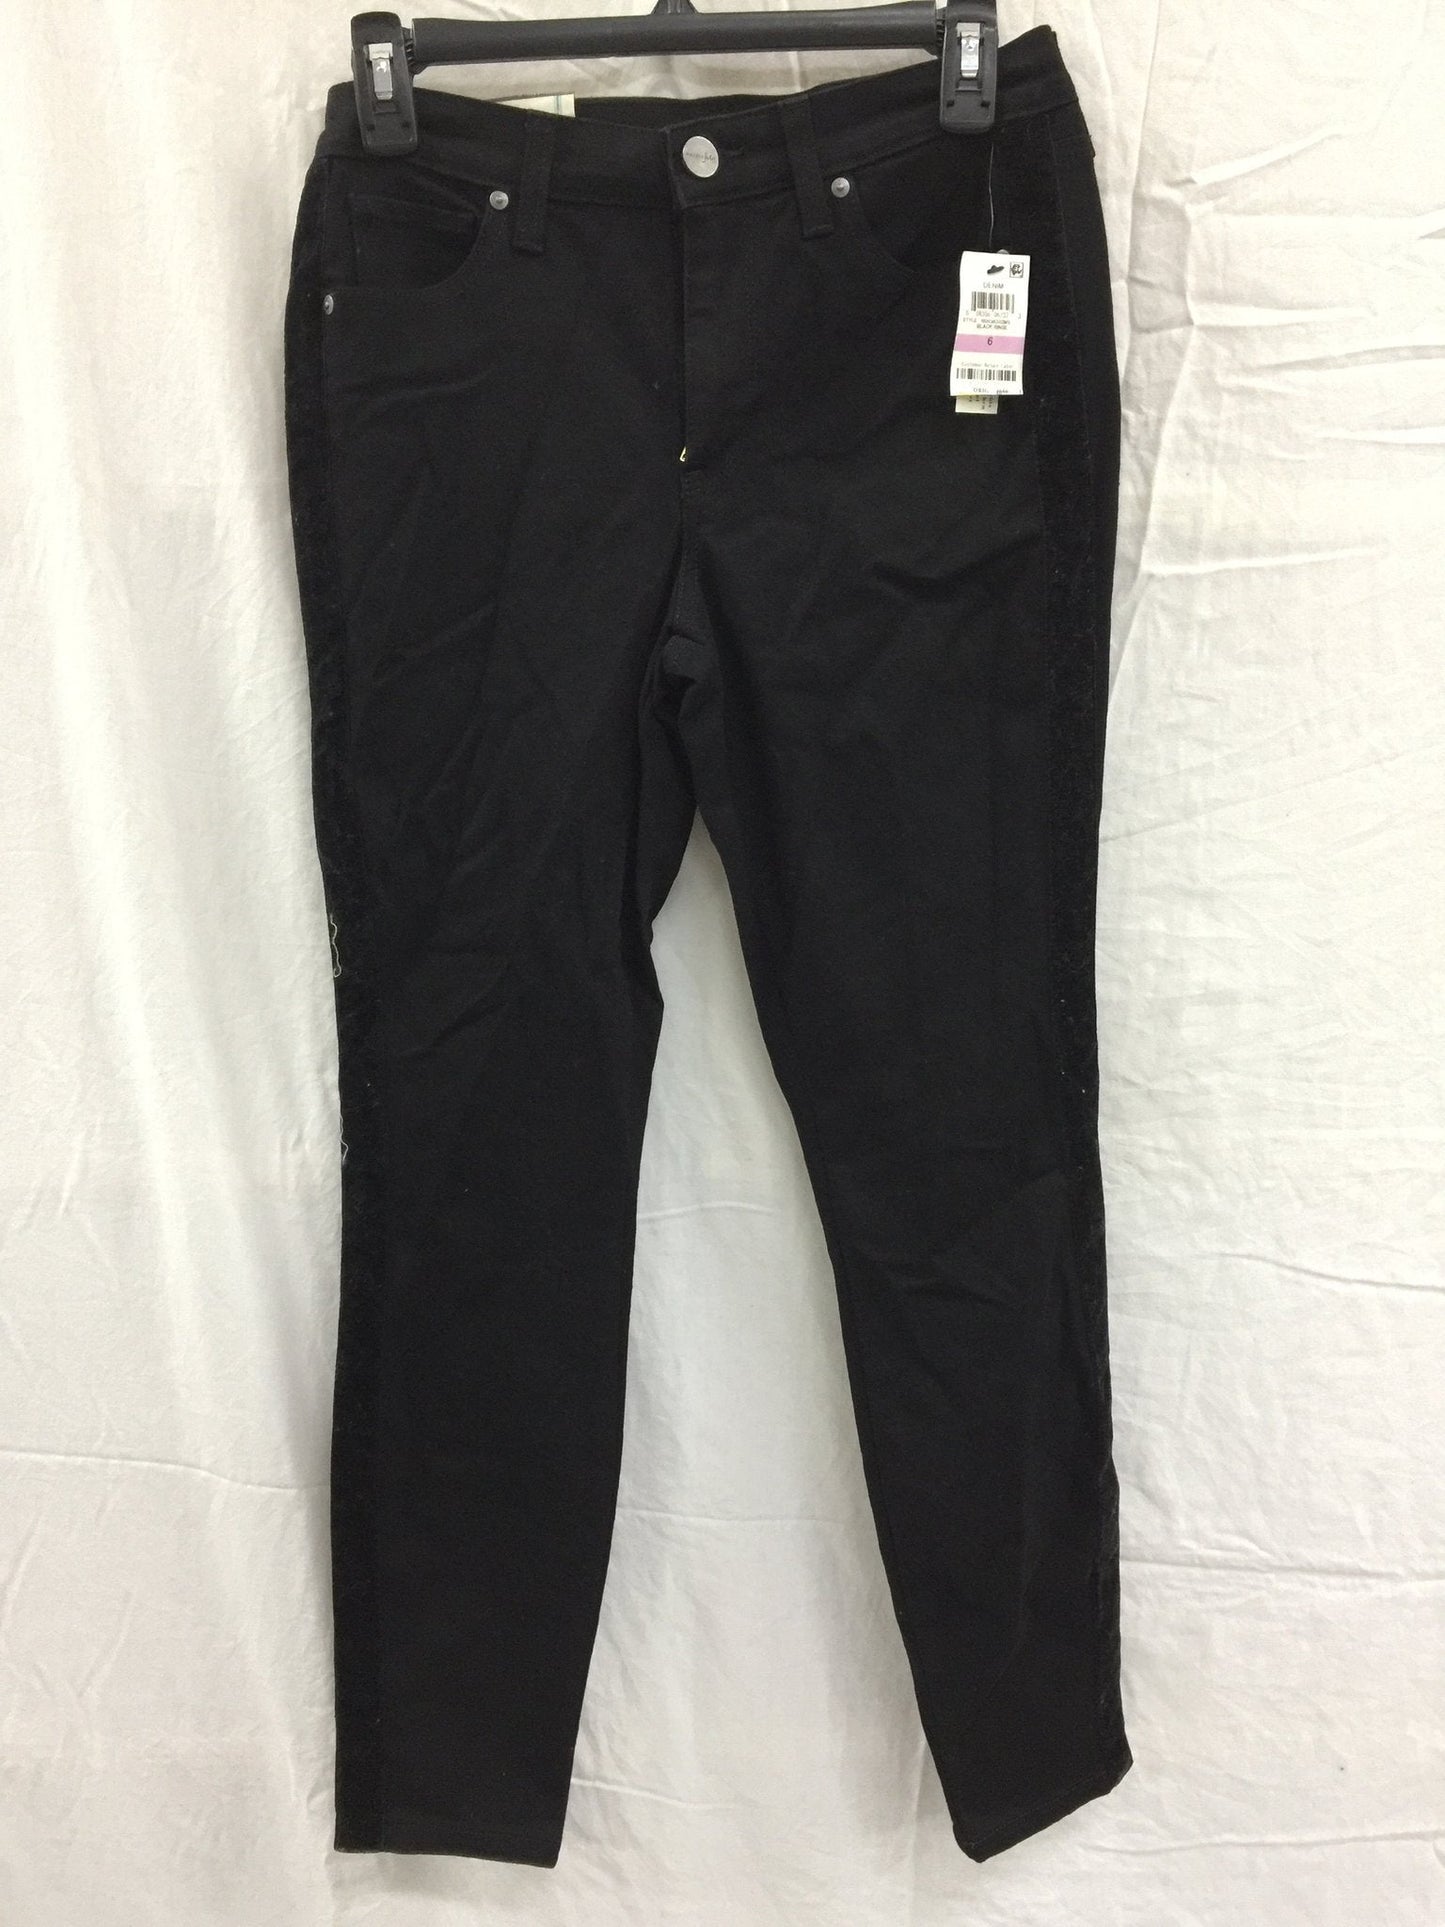 Maison Jules Side-Stripe Skinny Jeans Black Rinse 28 US 6